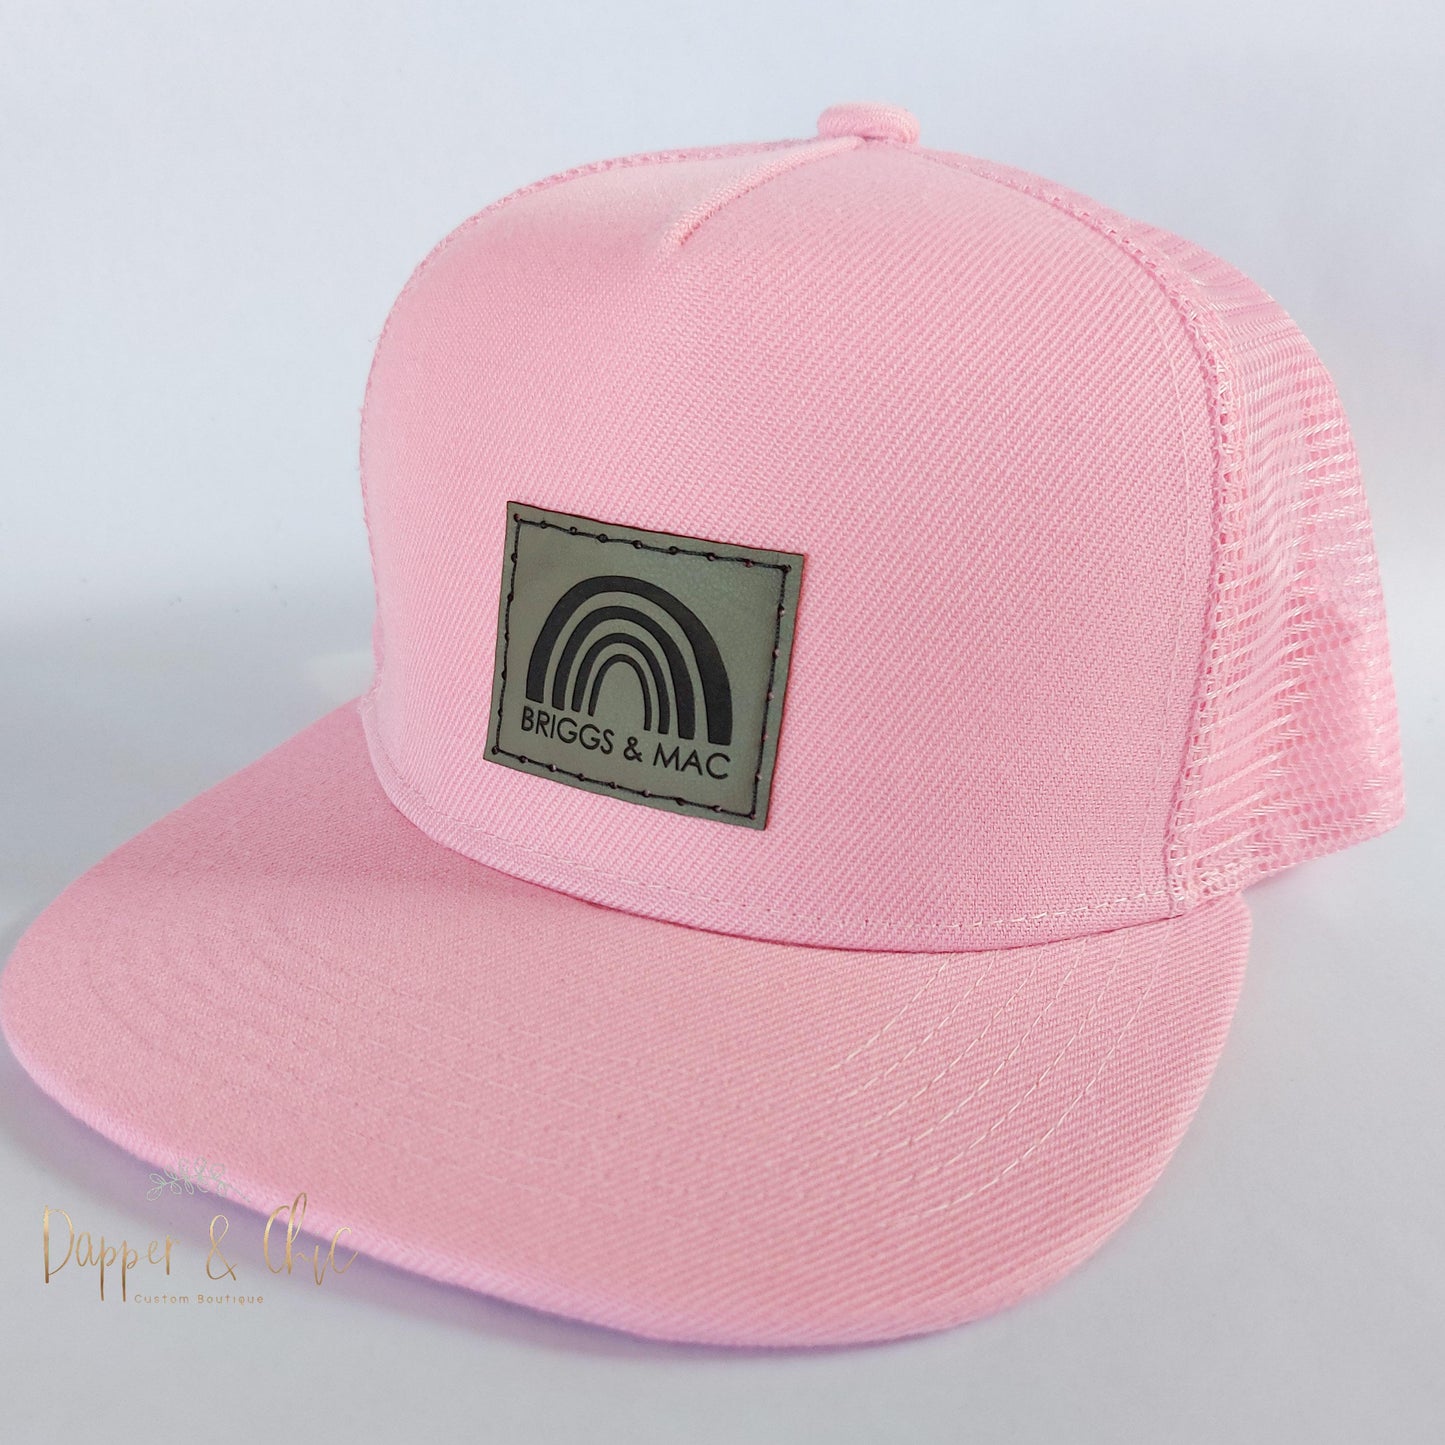 Pink rainbow hat